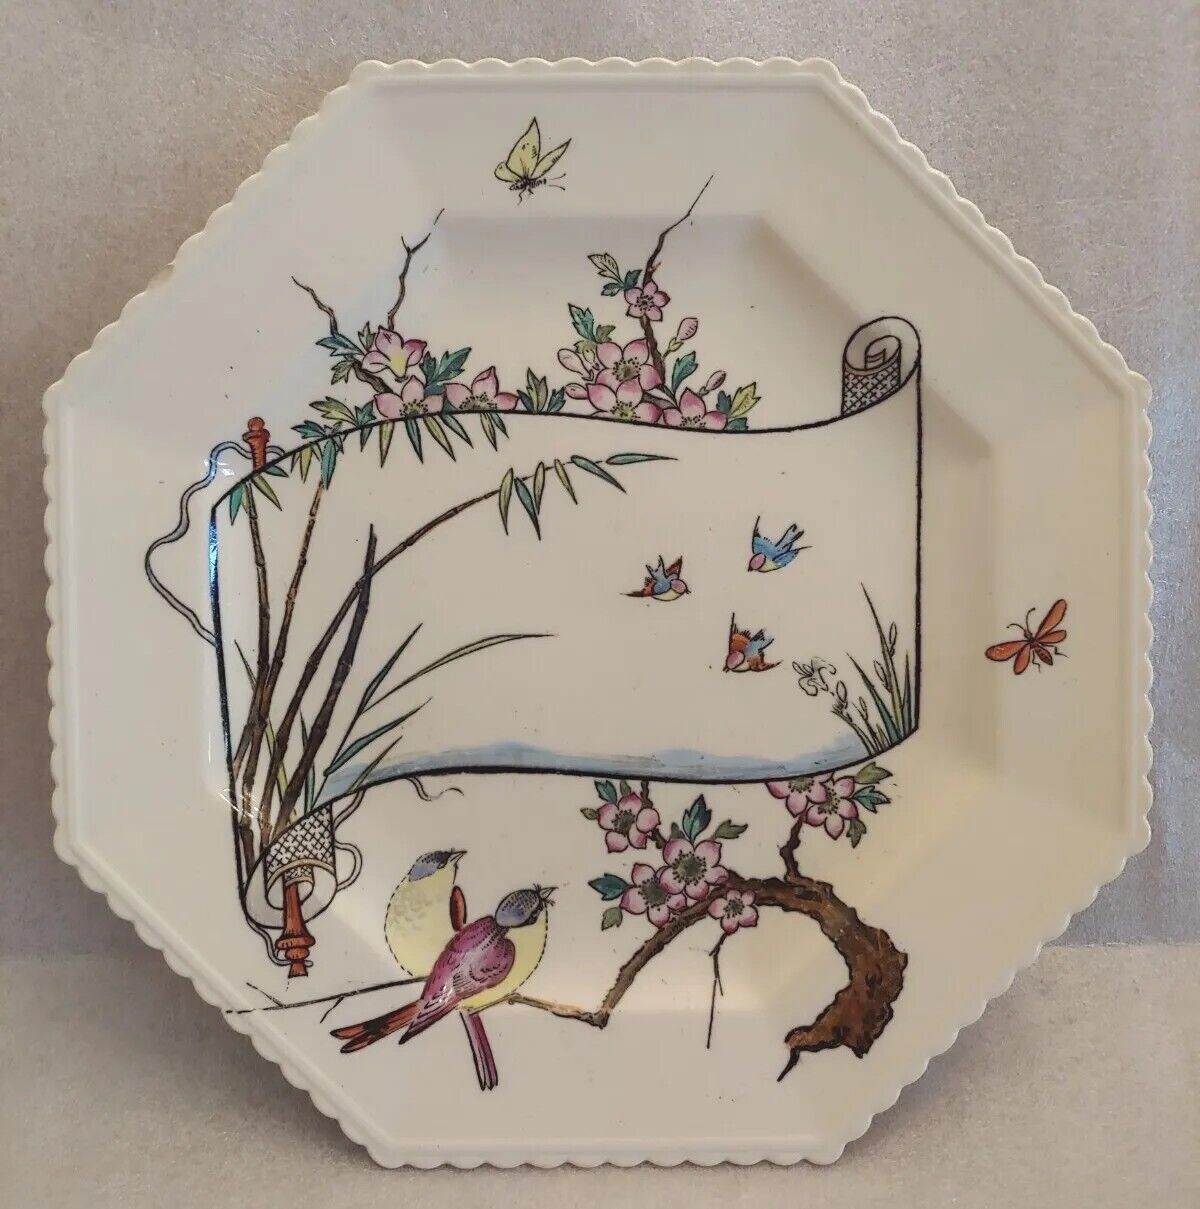 Aesthetic Movement 1879 Copeland Spode Plate Transferware Birds Cherry Blossoms